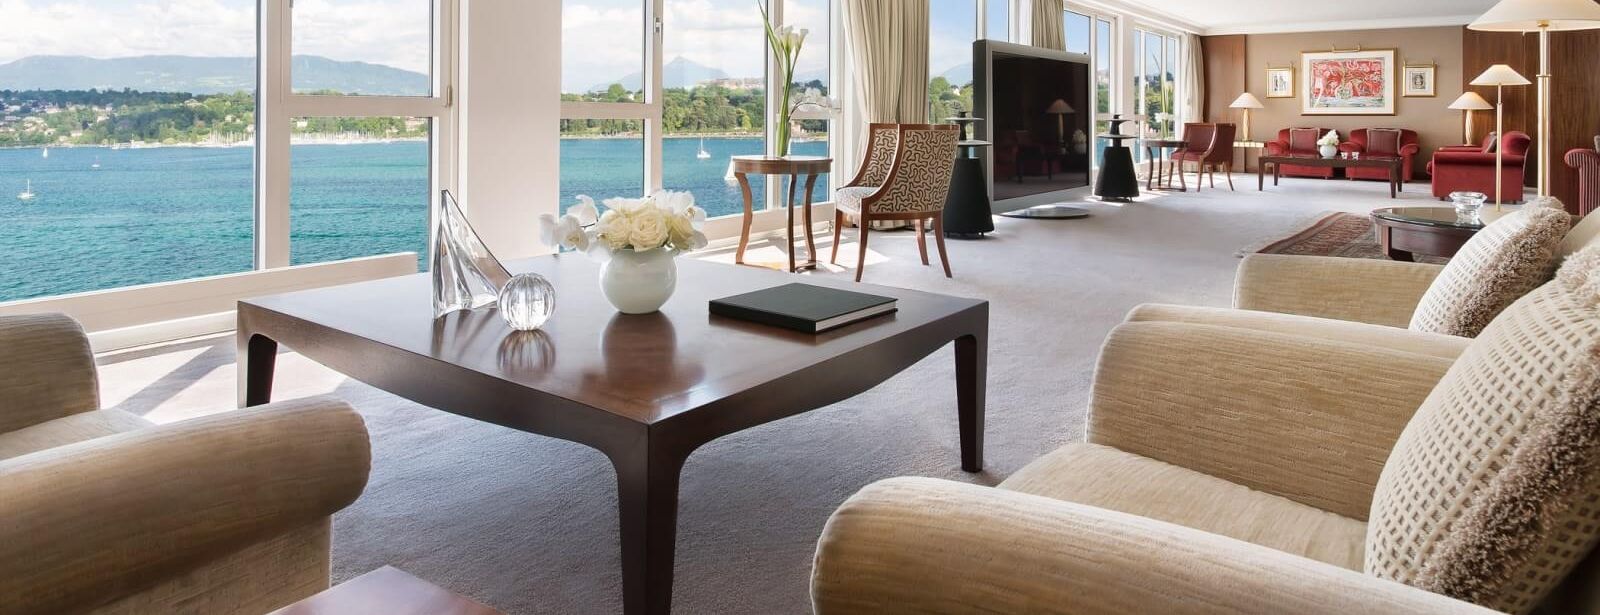 Royal Penthouse Suite - Hotel President Wilson, Geneva